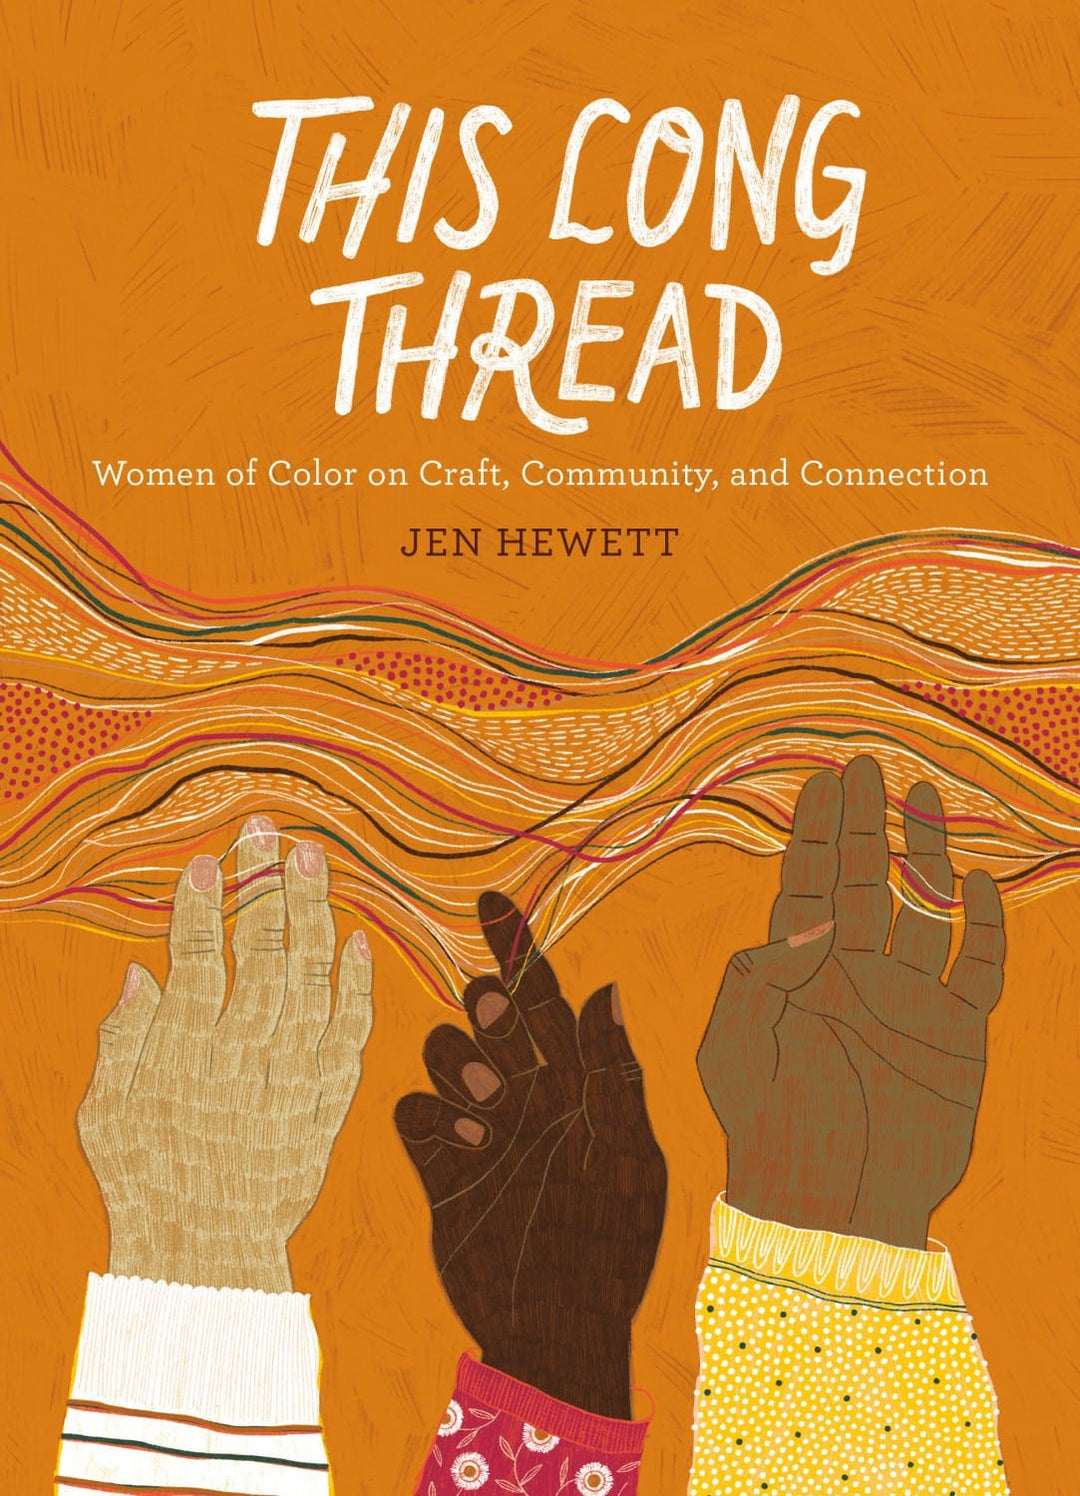 This Long Thread by Jen Hewett